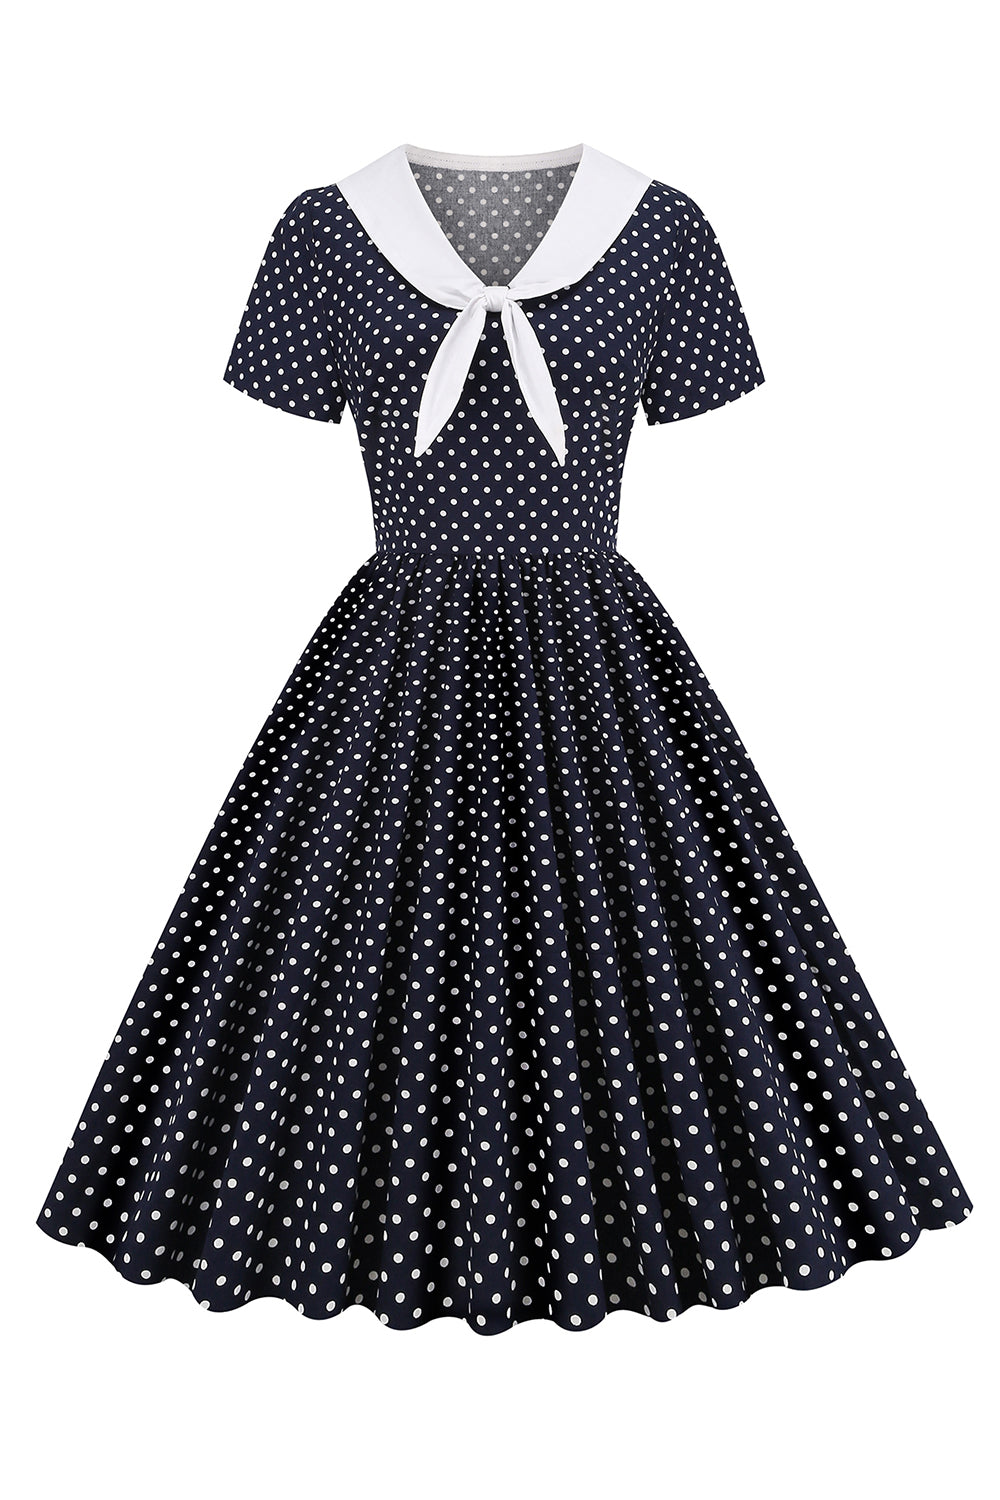 Zapaka Women Black and White 1950s Dress Polka Dots Short Sleeves Swing ...